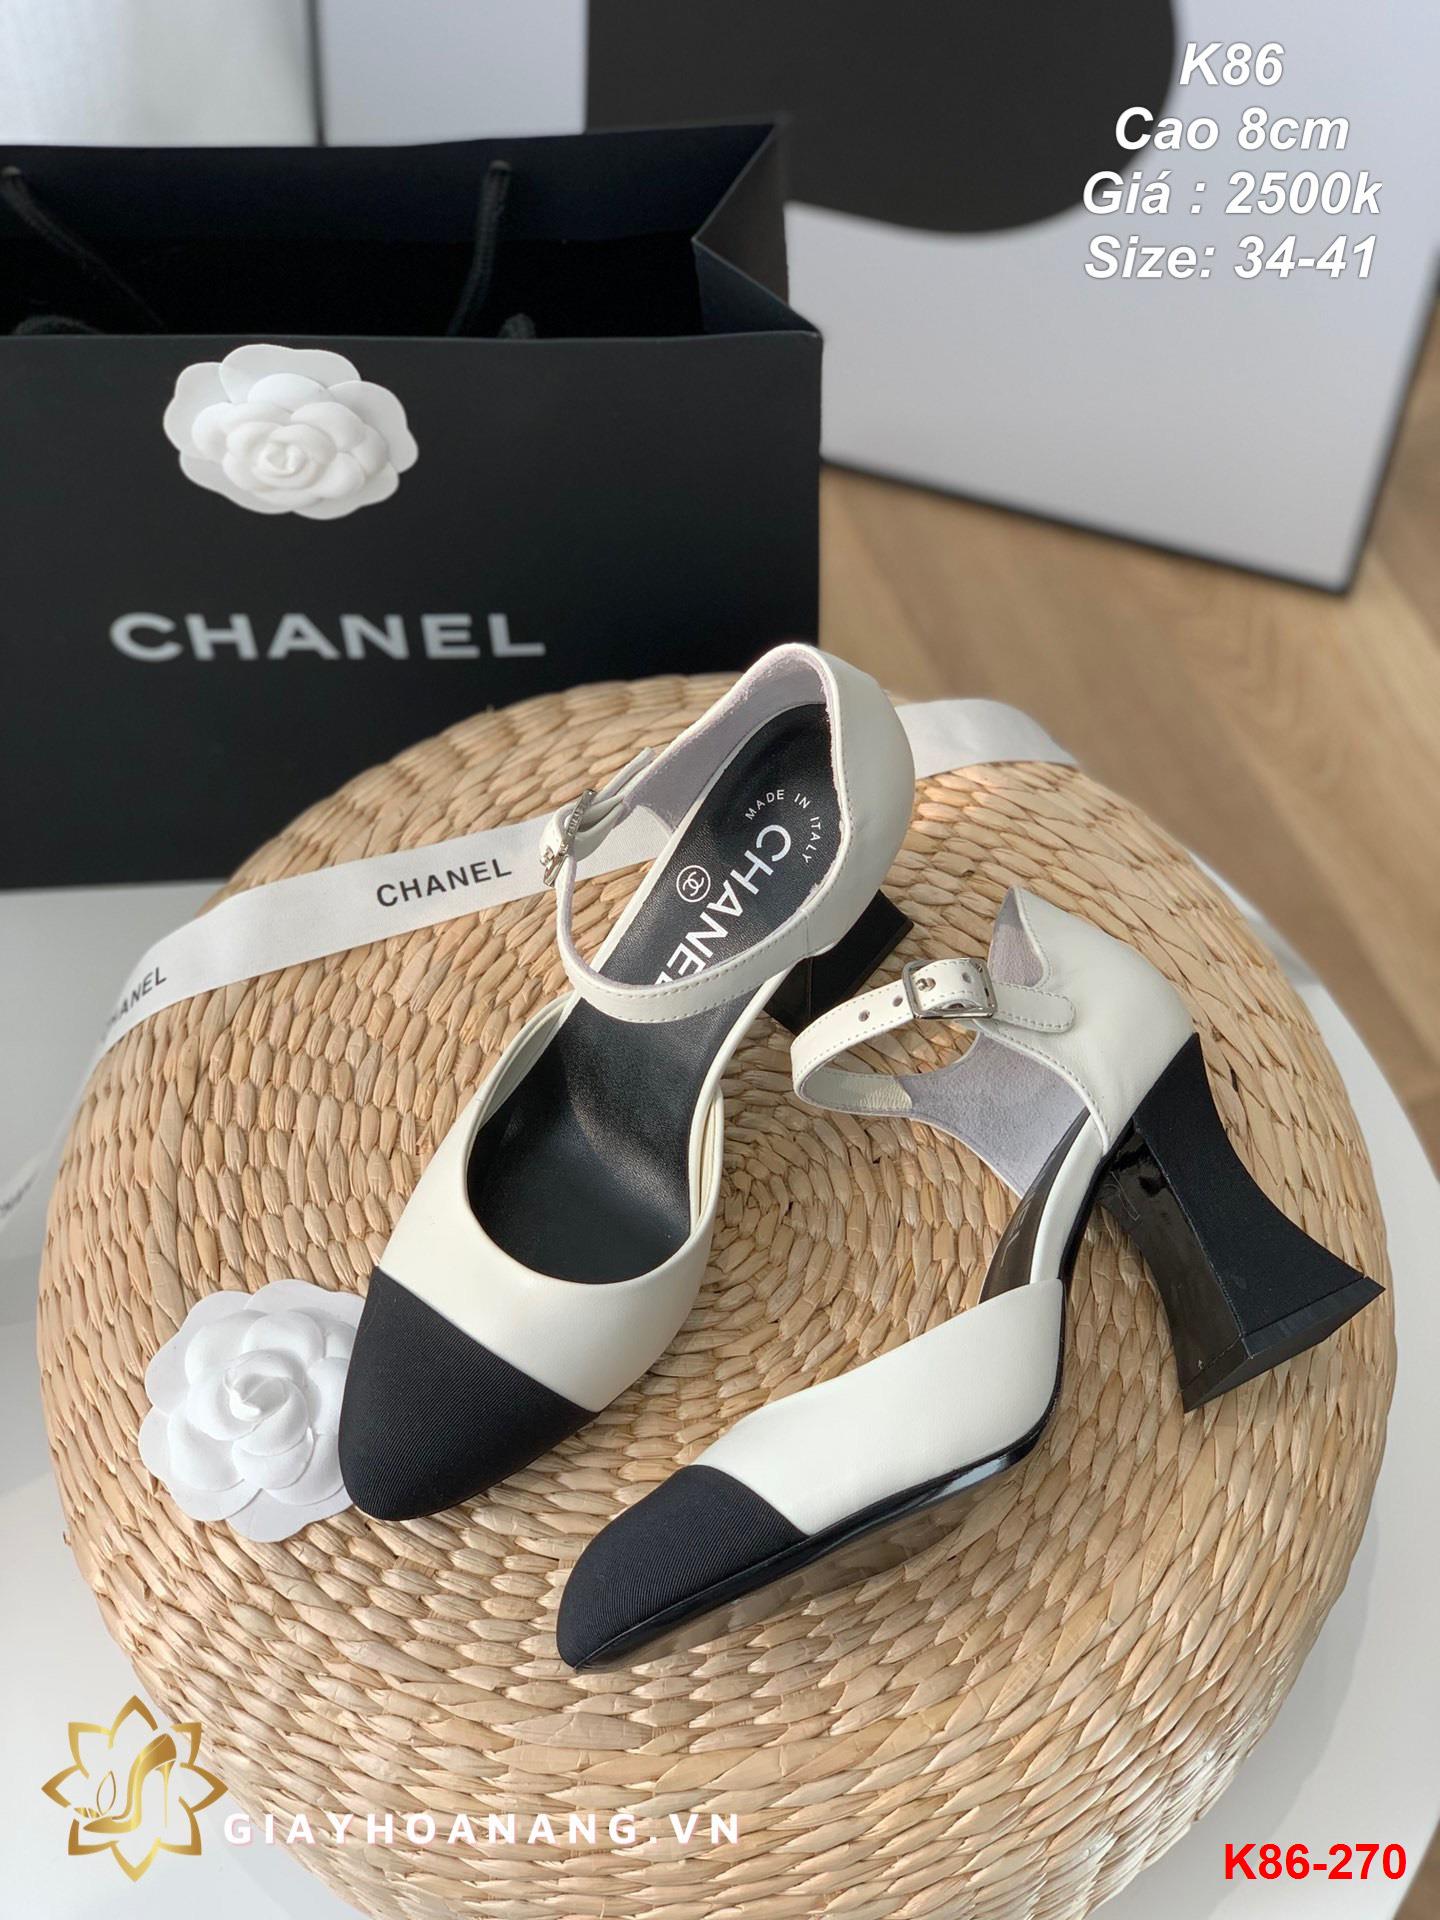 K86-270 Chanel sandal cao 8cm siêu cấp